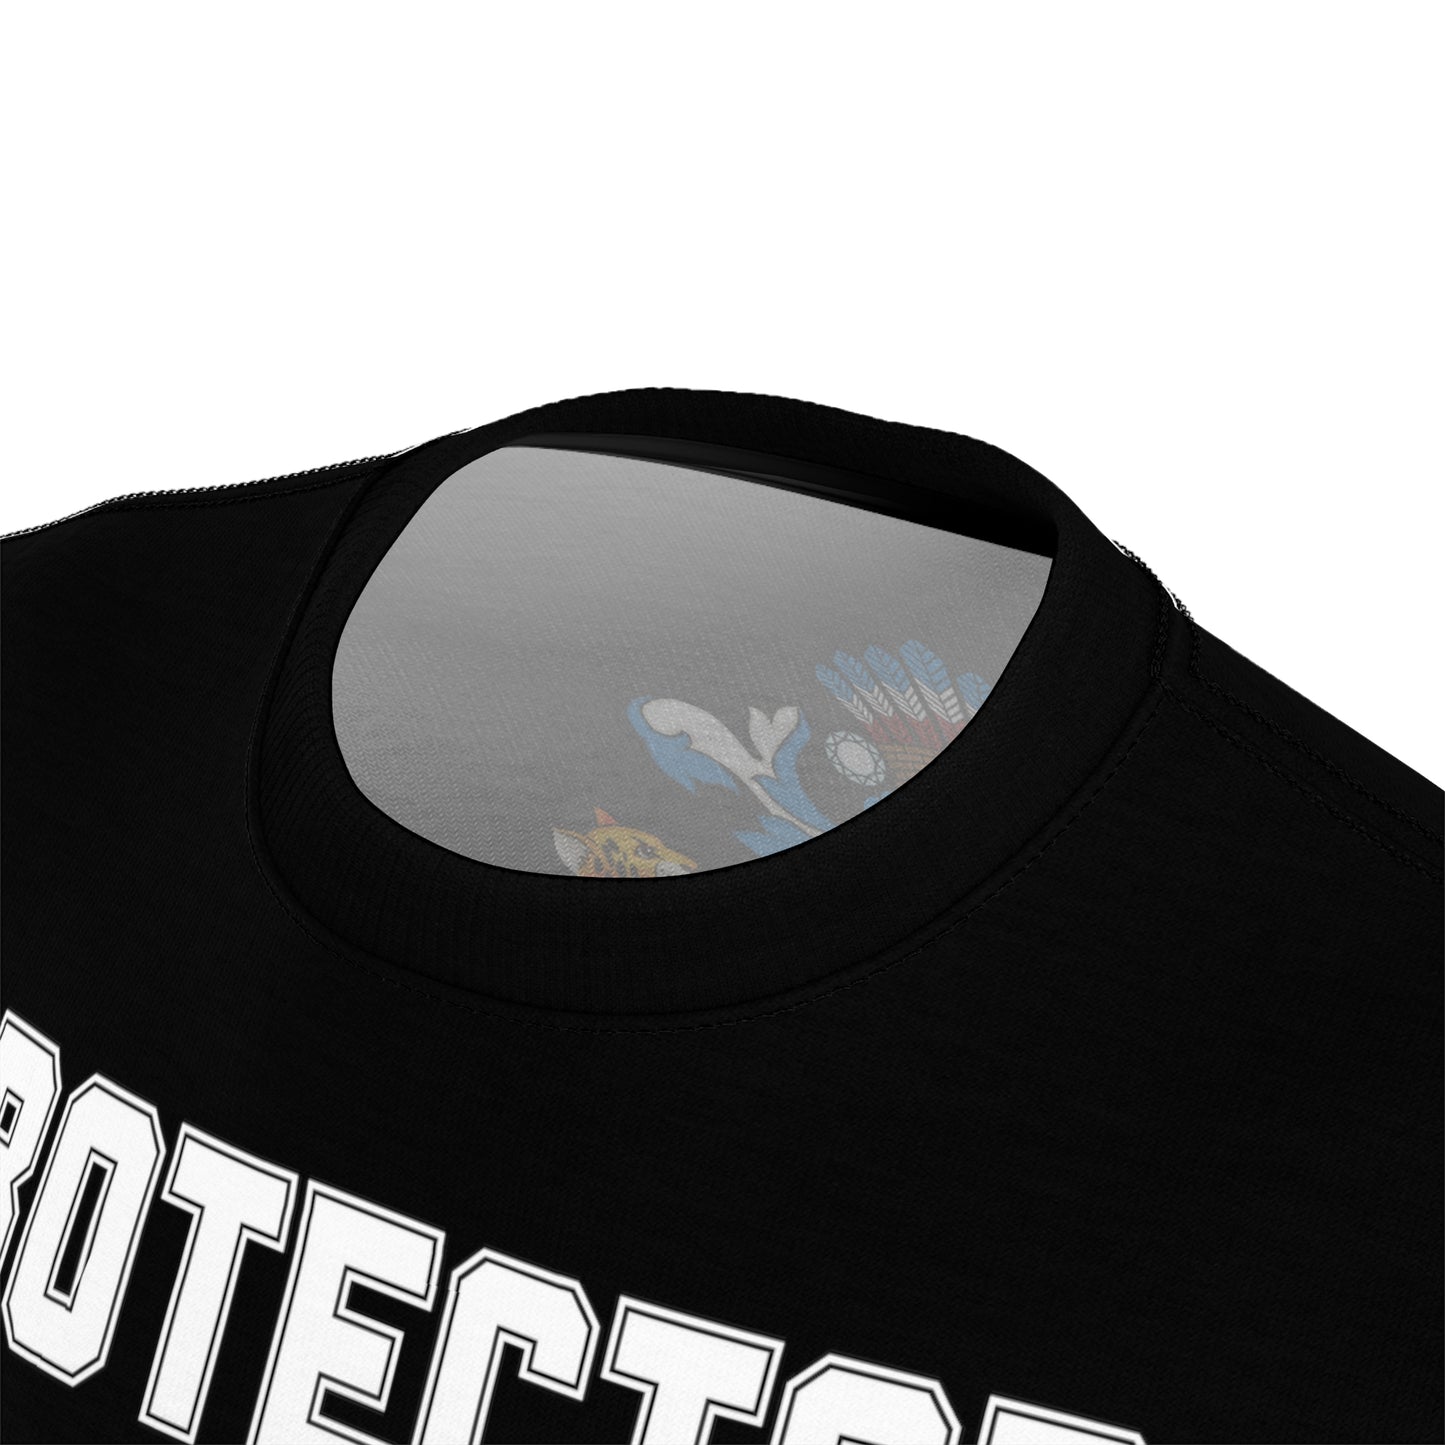 Protector Black Short Sleeve Men Guyana Flag T-Shirt.